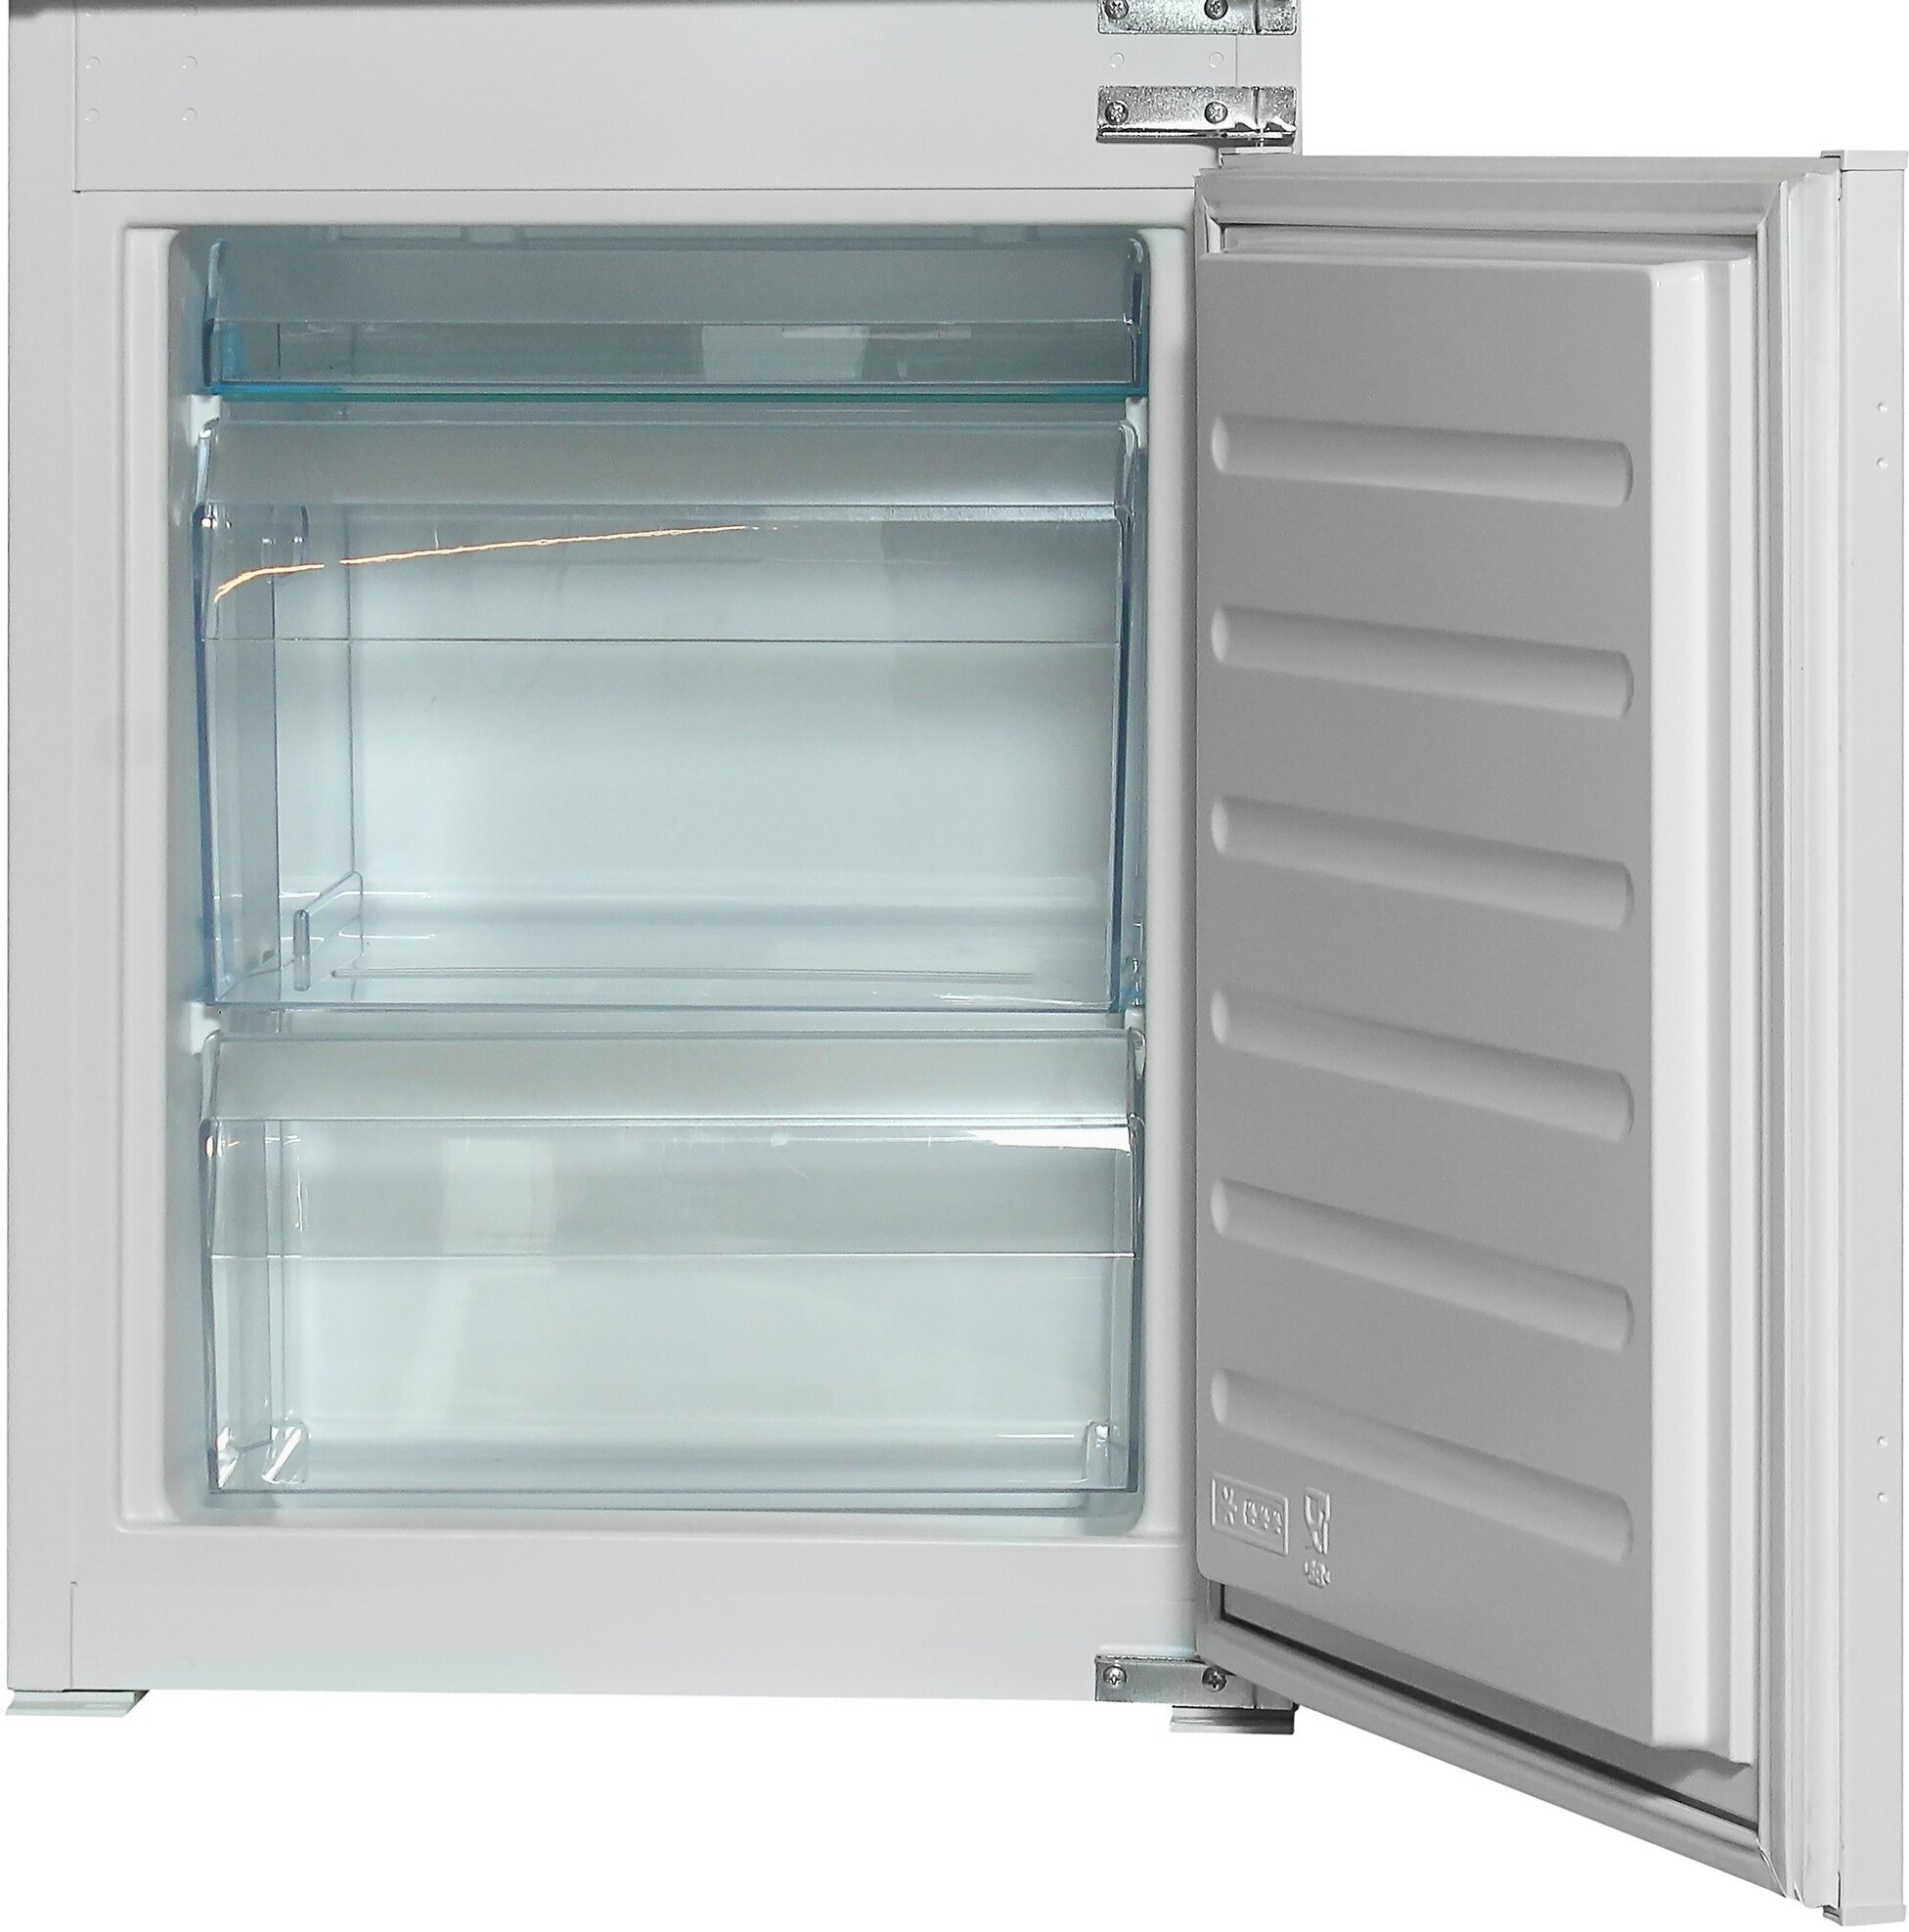 Встраиваемый холодильник HOTPOINT-ARISTON BCB 70301 AA Казахстан